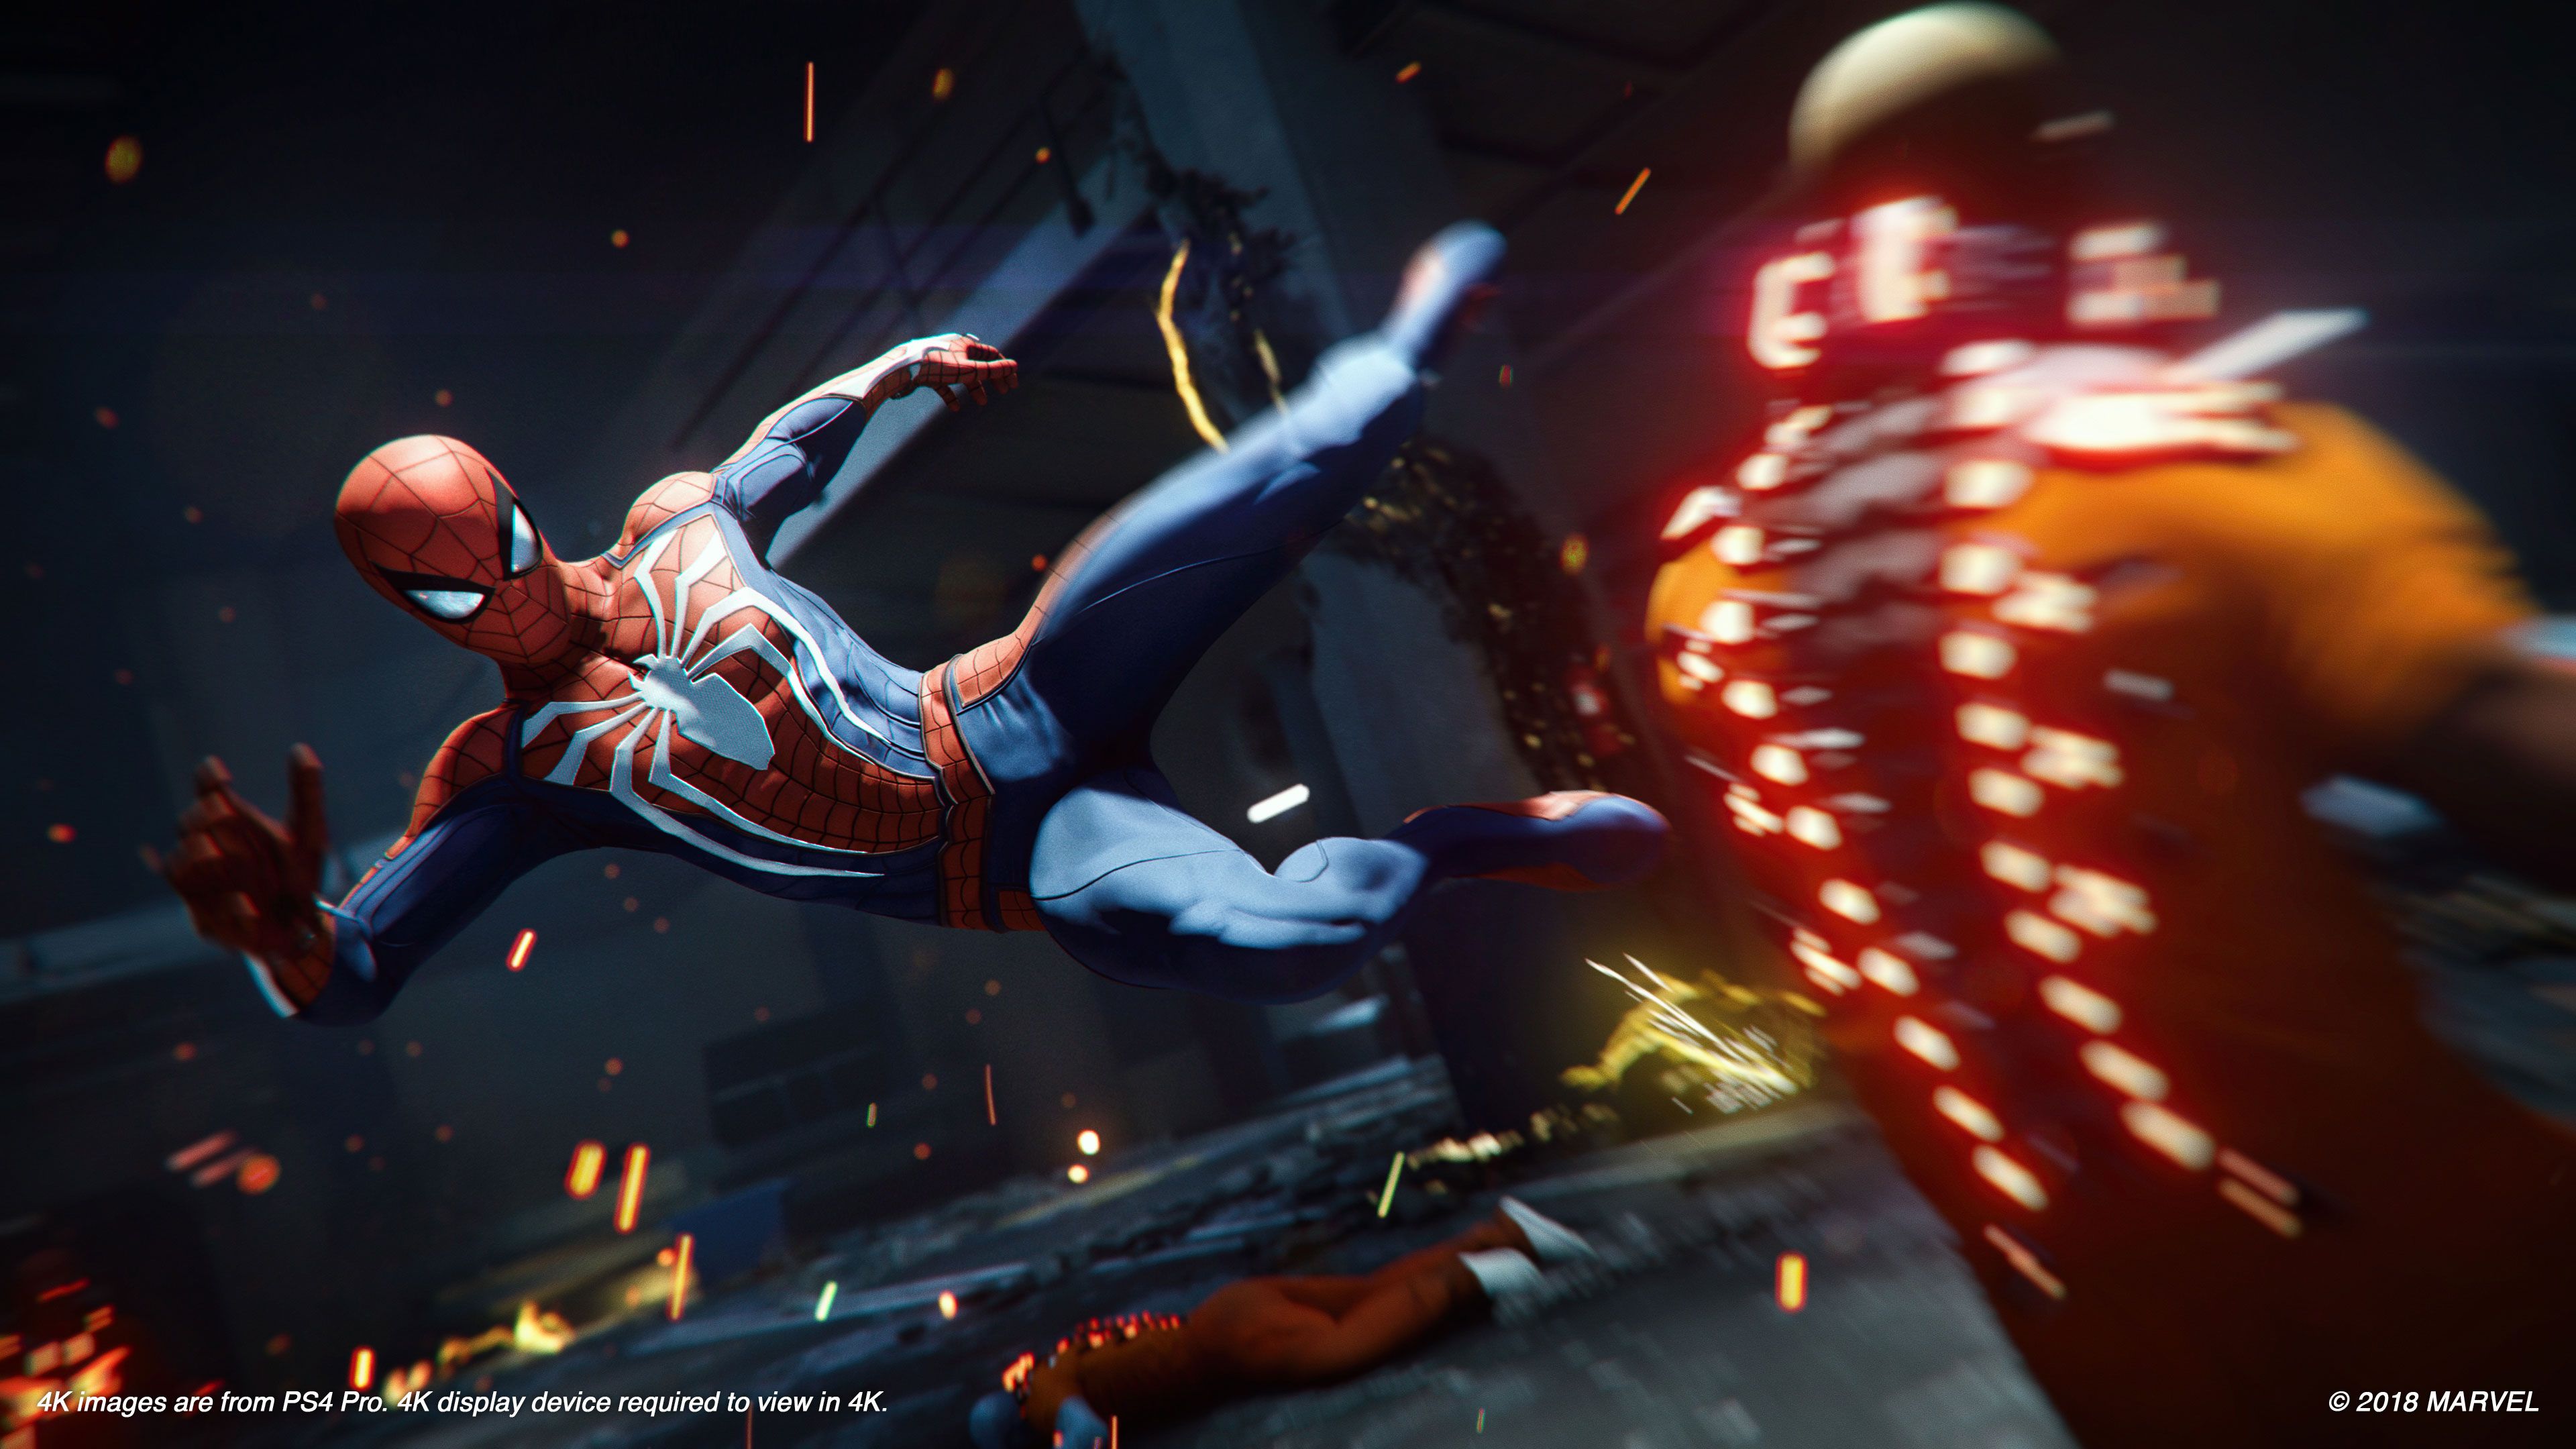 Marvel's Spider Man